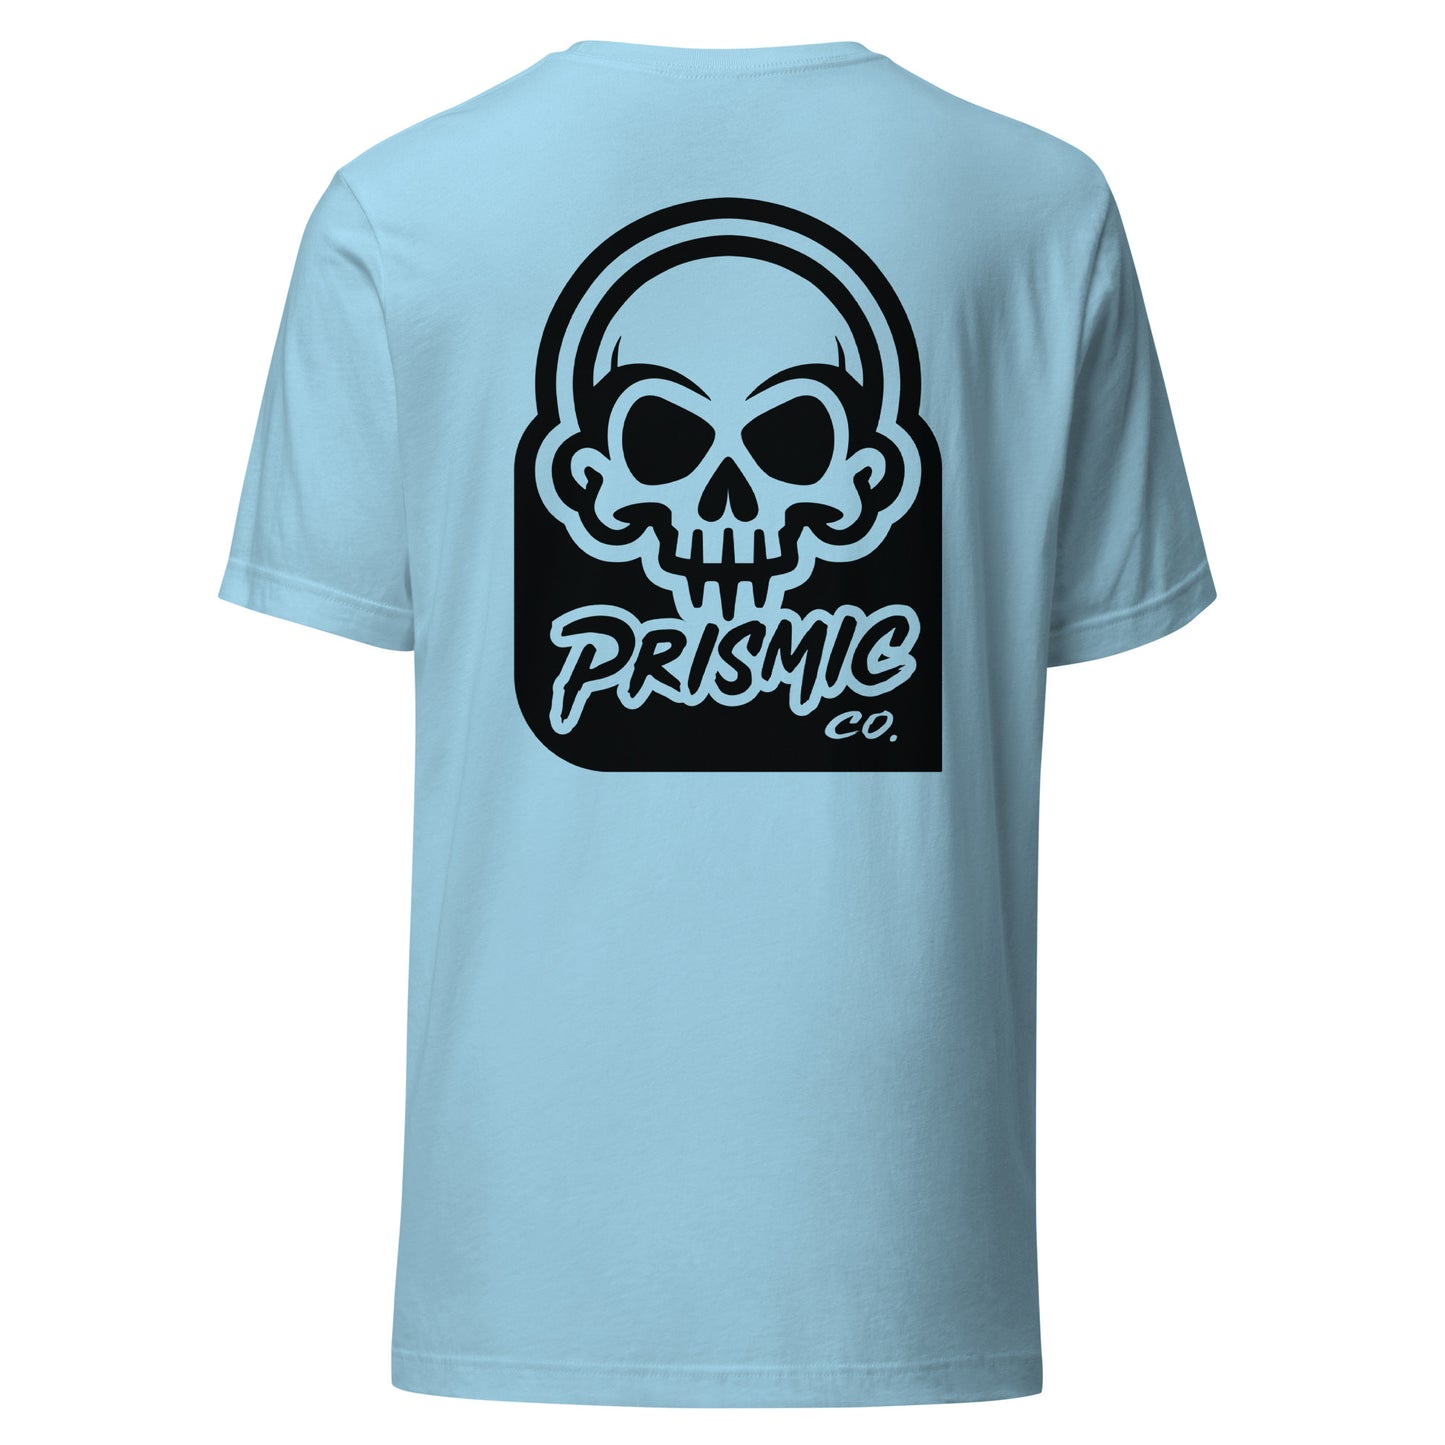 Prismic Co. Black Logo T-Shirt